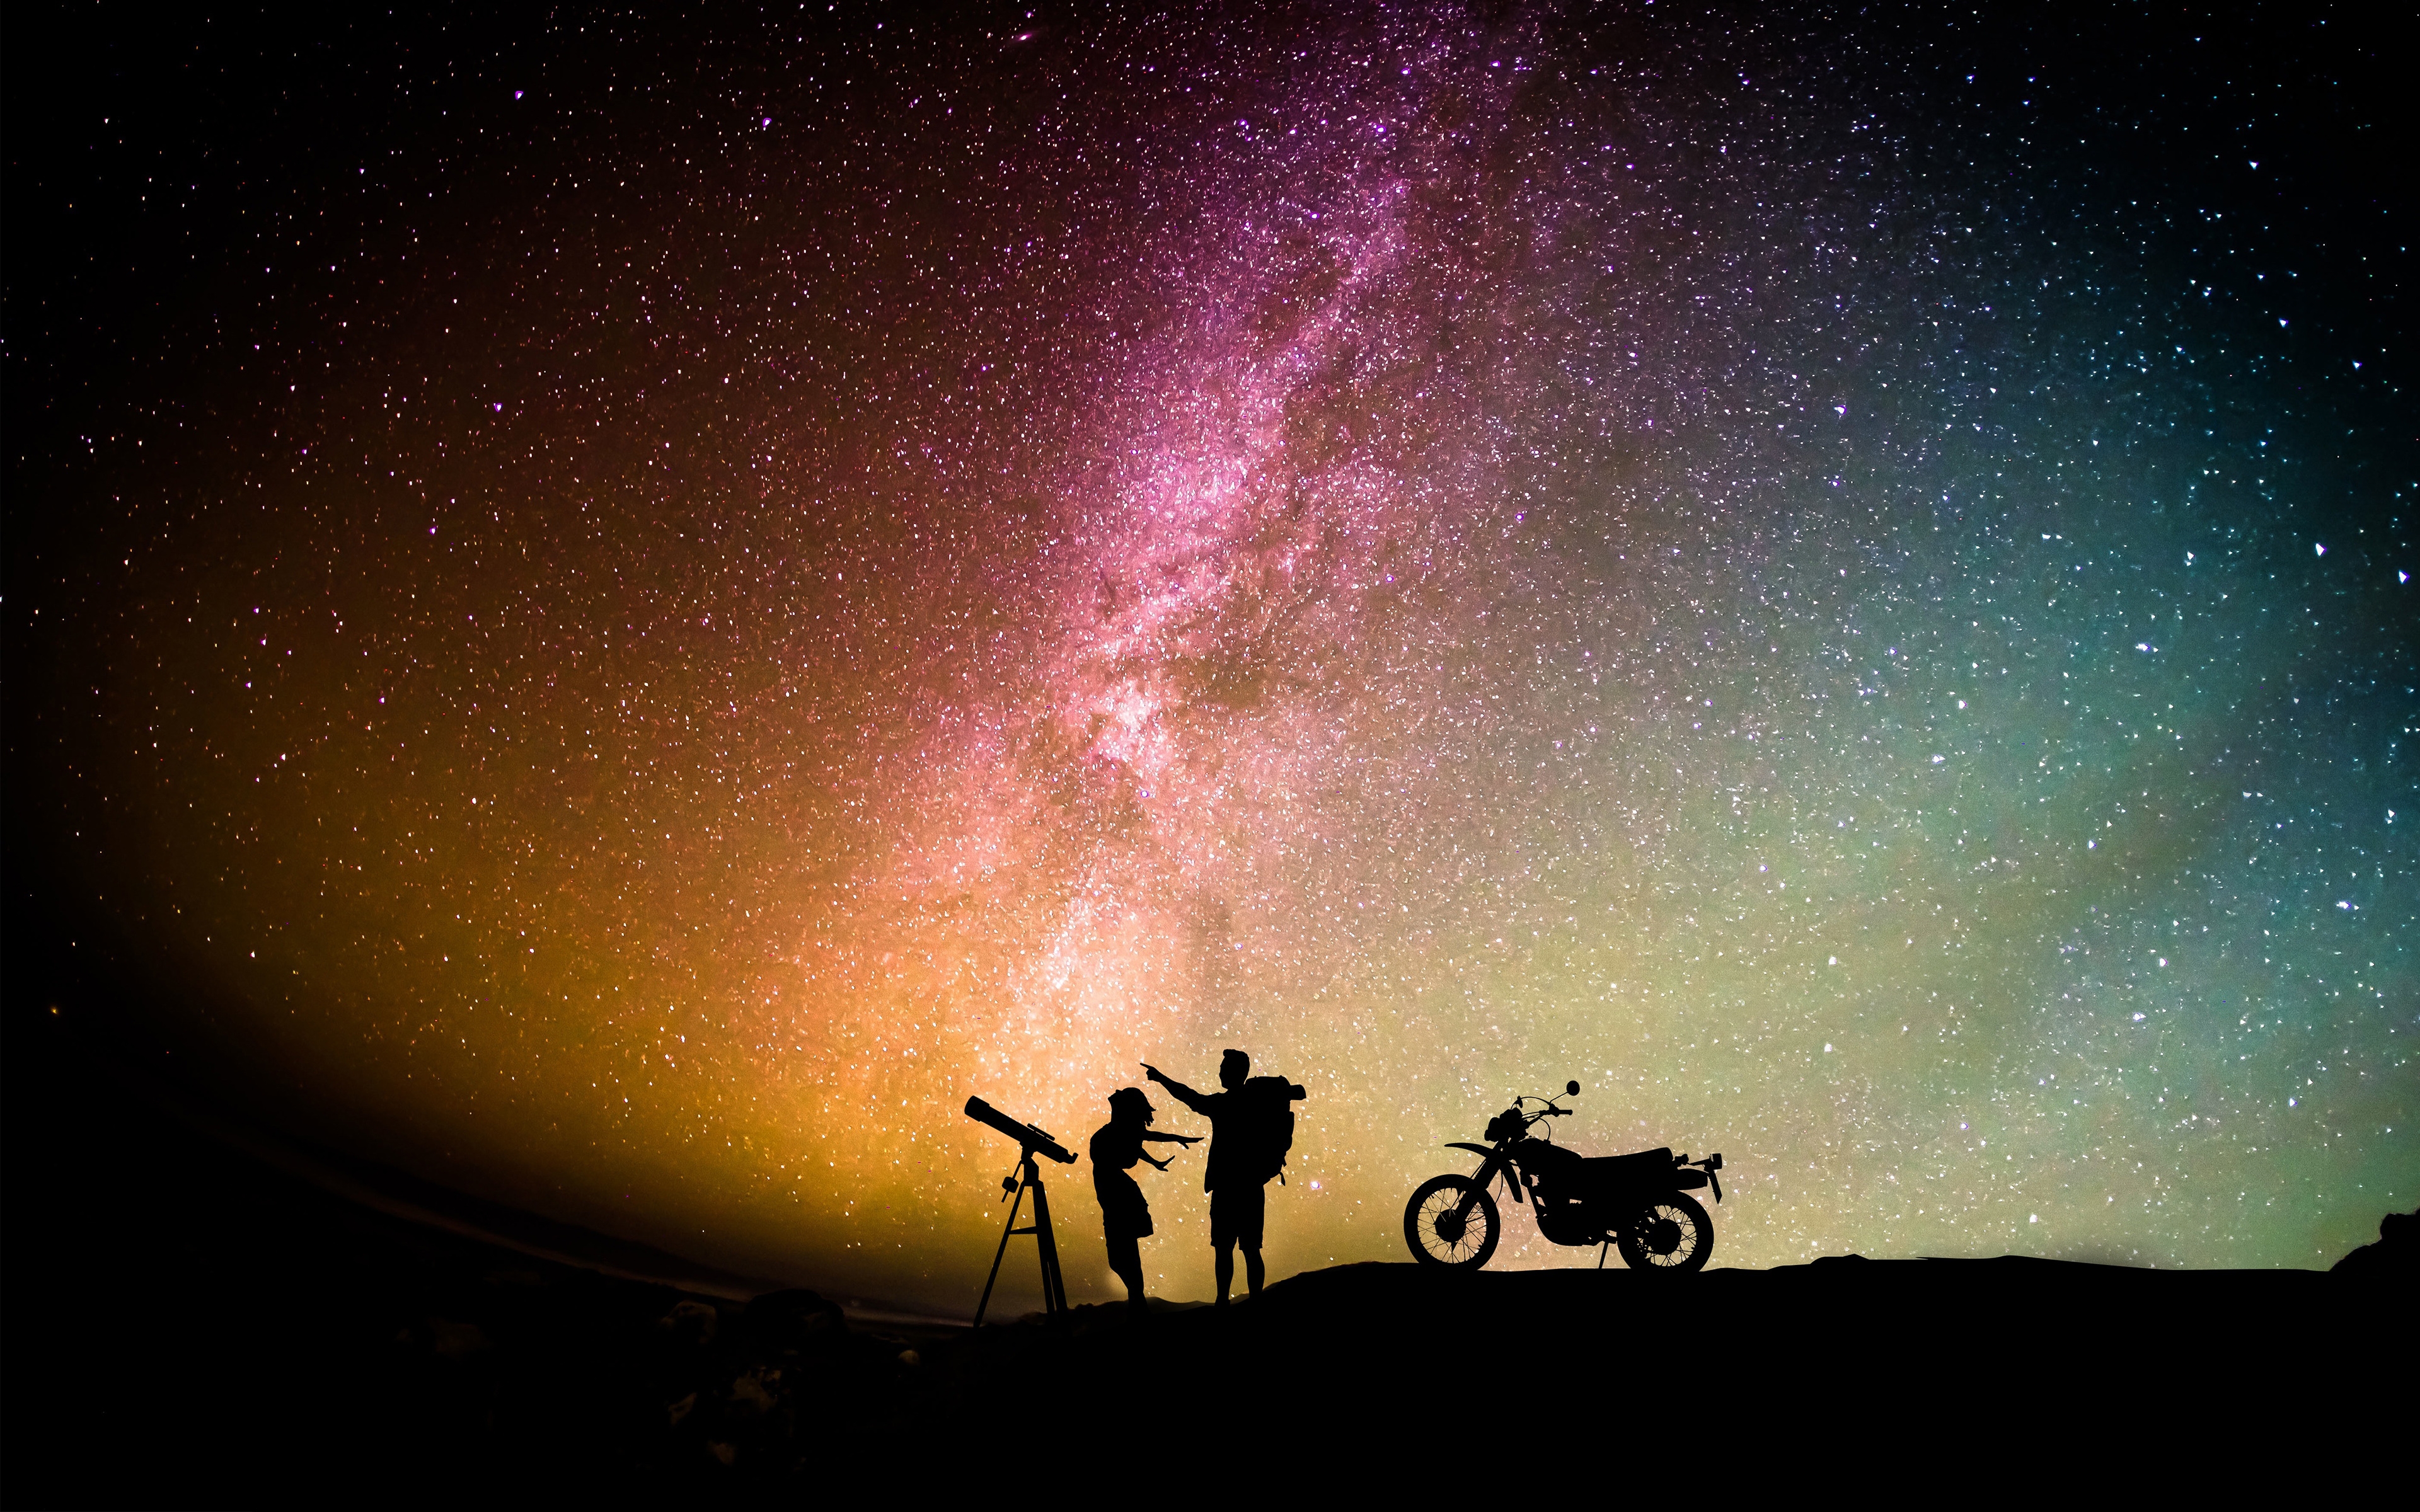 Бесплатное фото Силуэт астрономов на фоне звездного неба